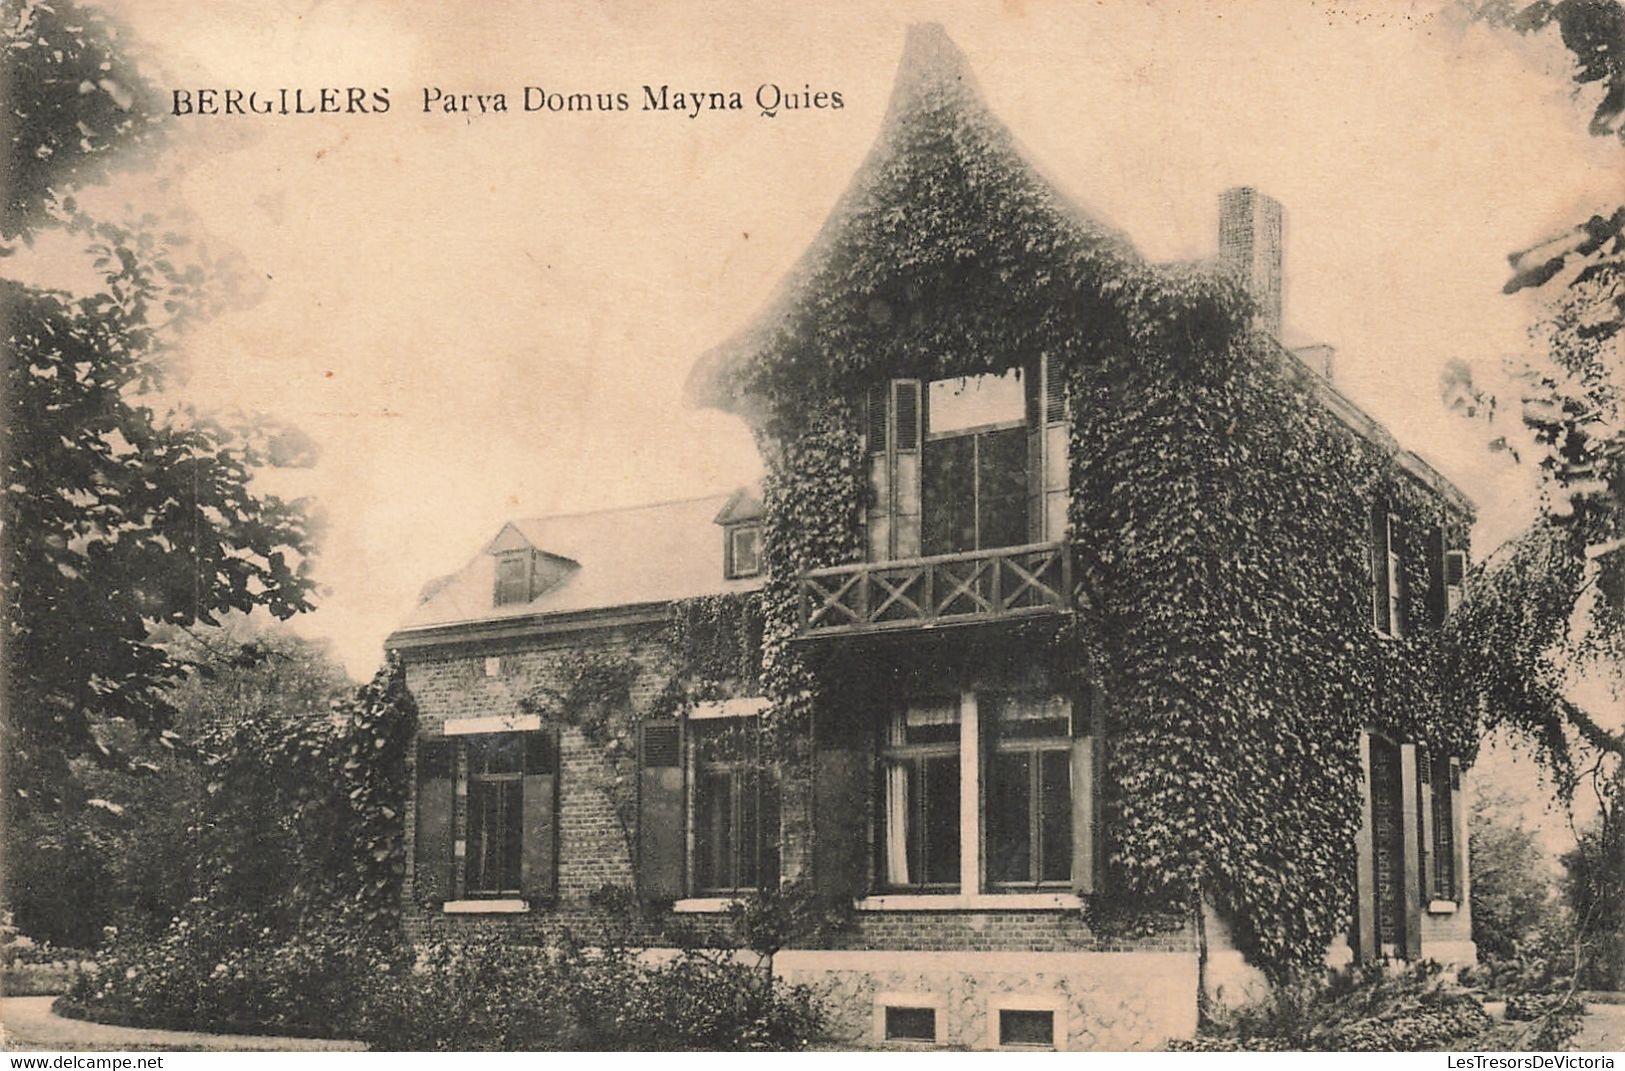 Belgique - Bergilers - Parva Domus Mayna Quies - Photo Butenaers - Carte Postale Ancienne - Oreye